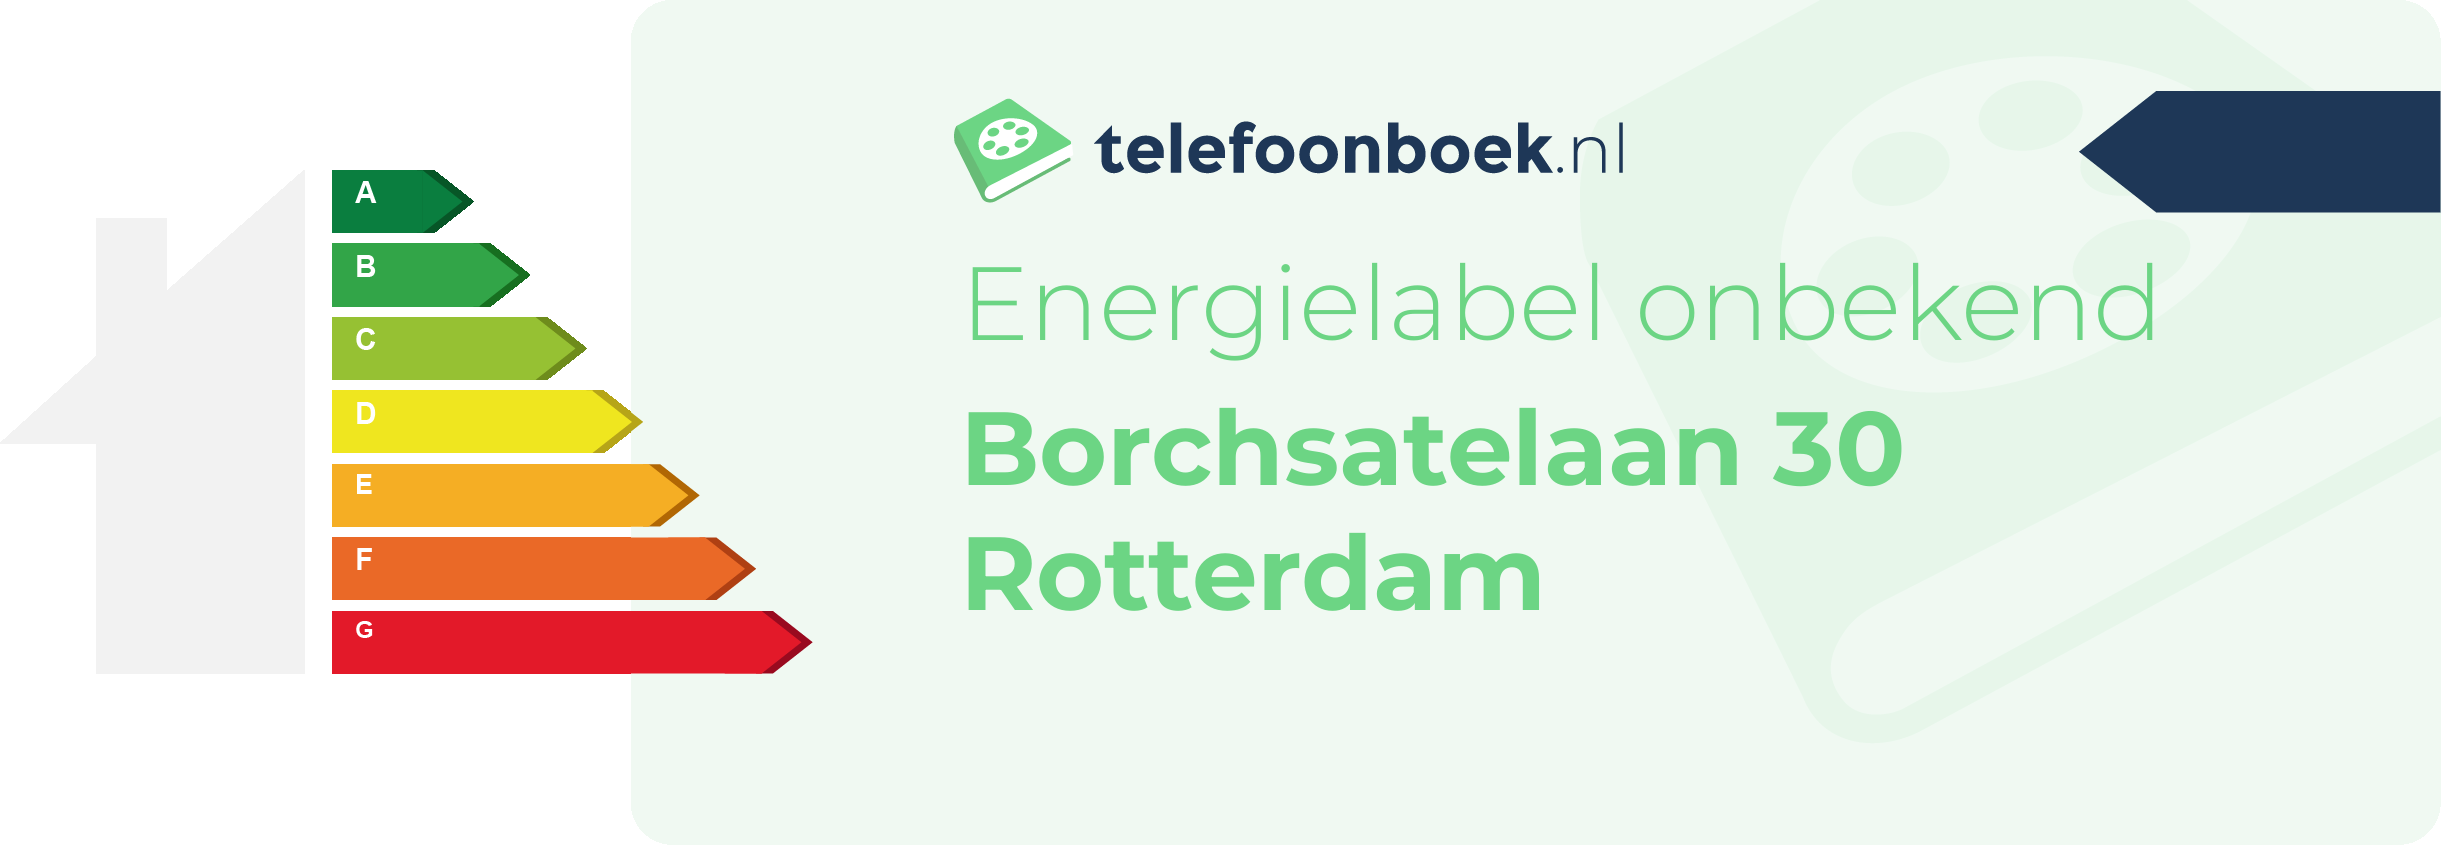 Energielabel Borchsatelaan 30 Rotterdam